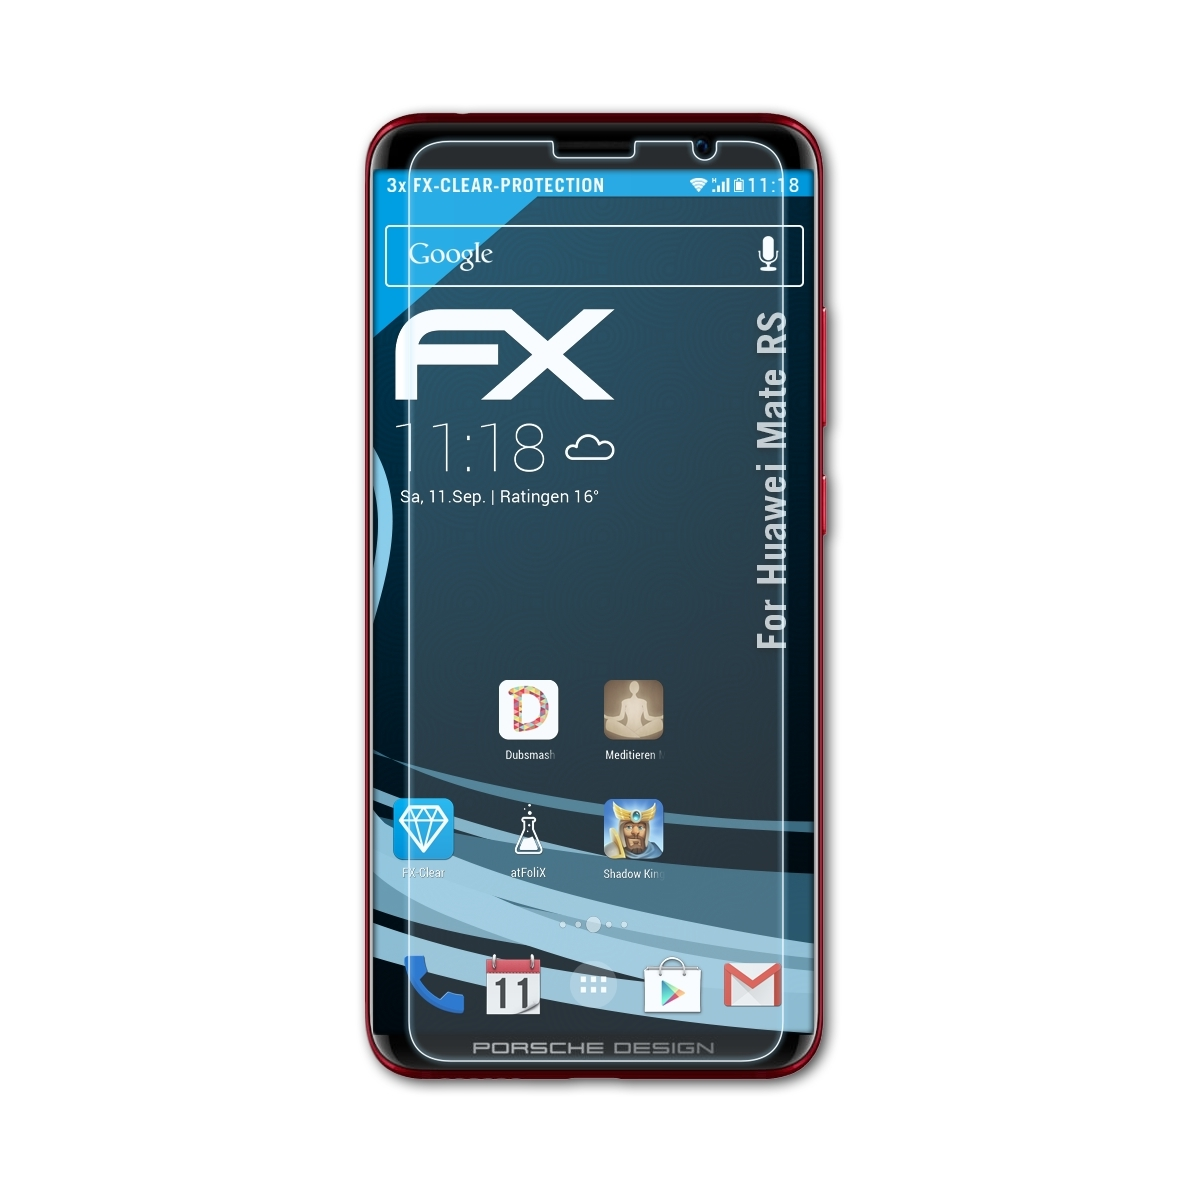 FX-Clear RS) 3x Displayschutz(für Mate ATFOLIX Huawei